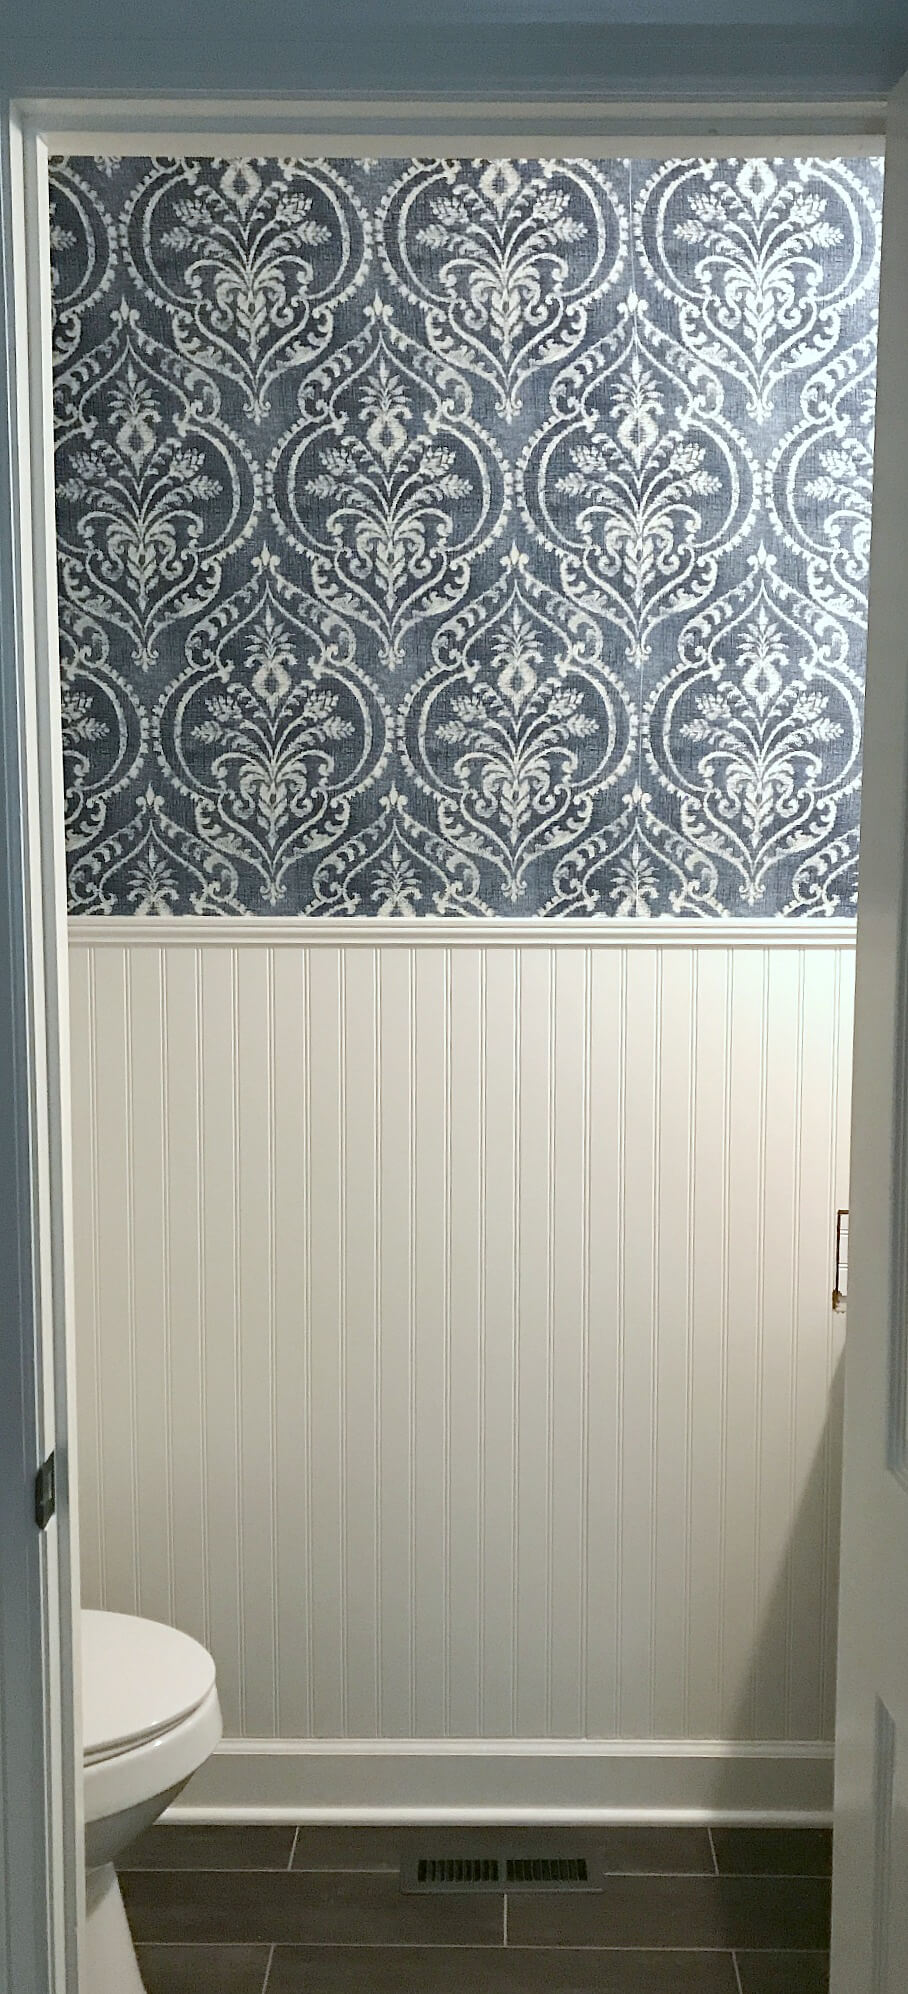 Temporary Wallpaper Tutorial - Farmhouse Powder Room Design - HD Wallpaper 